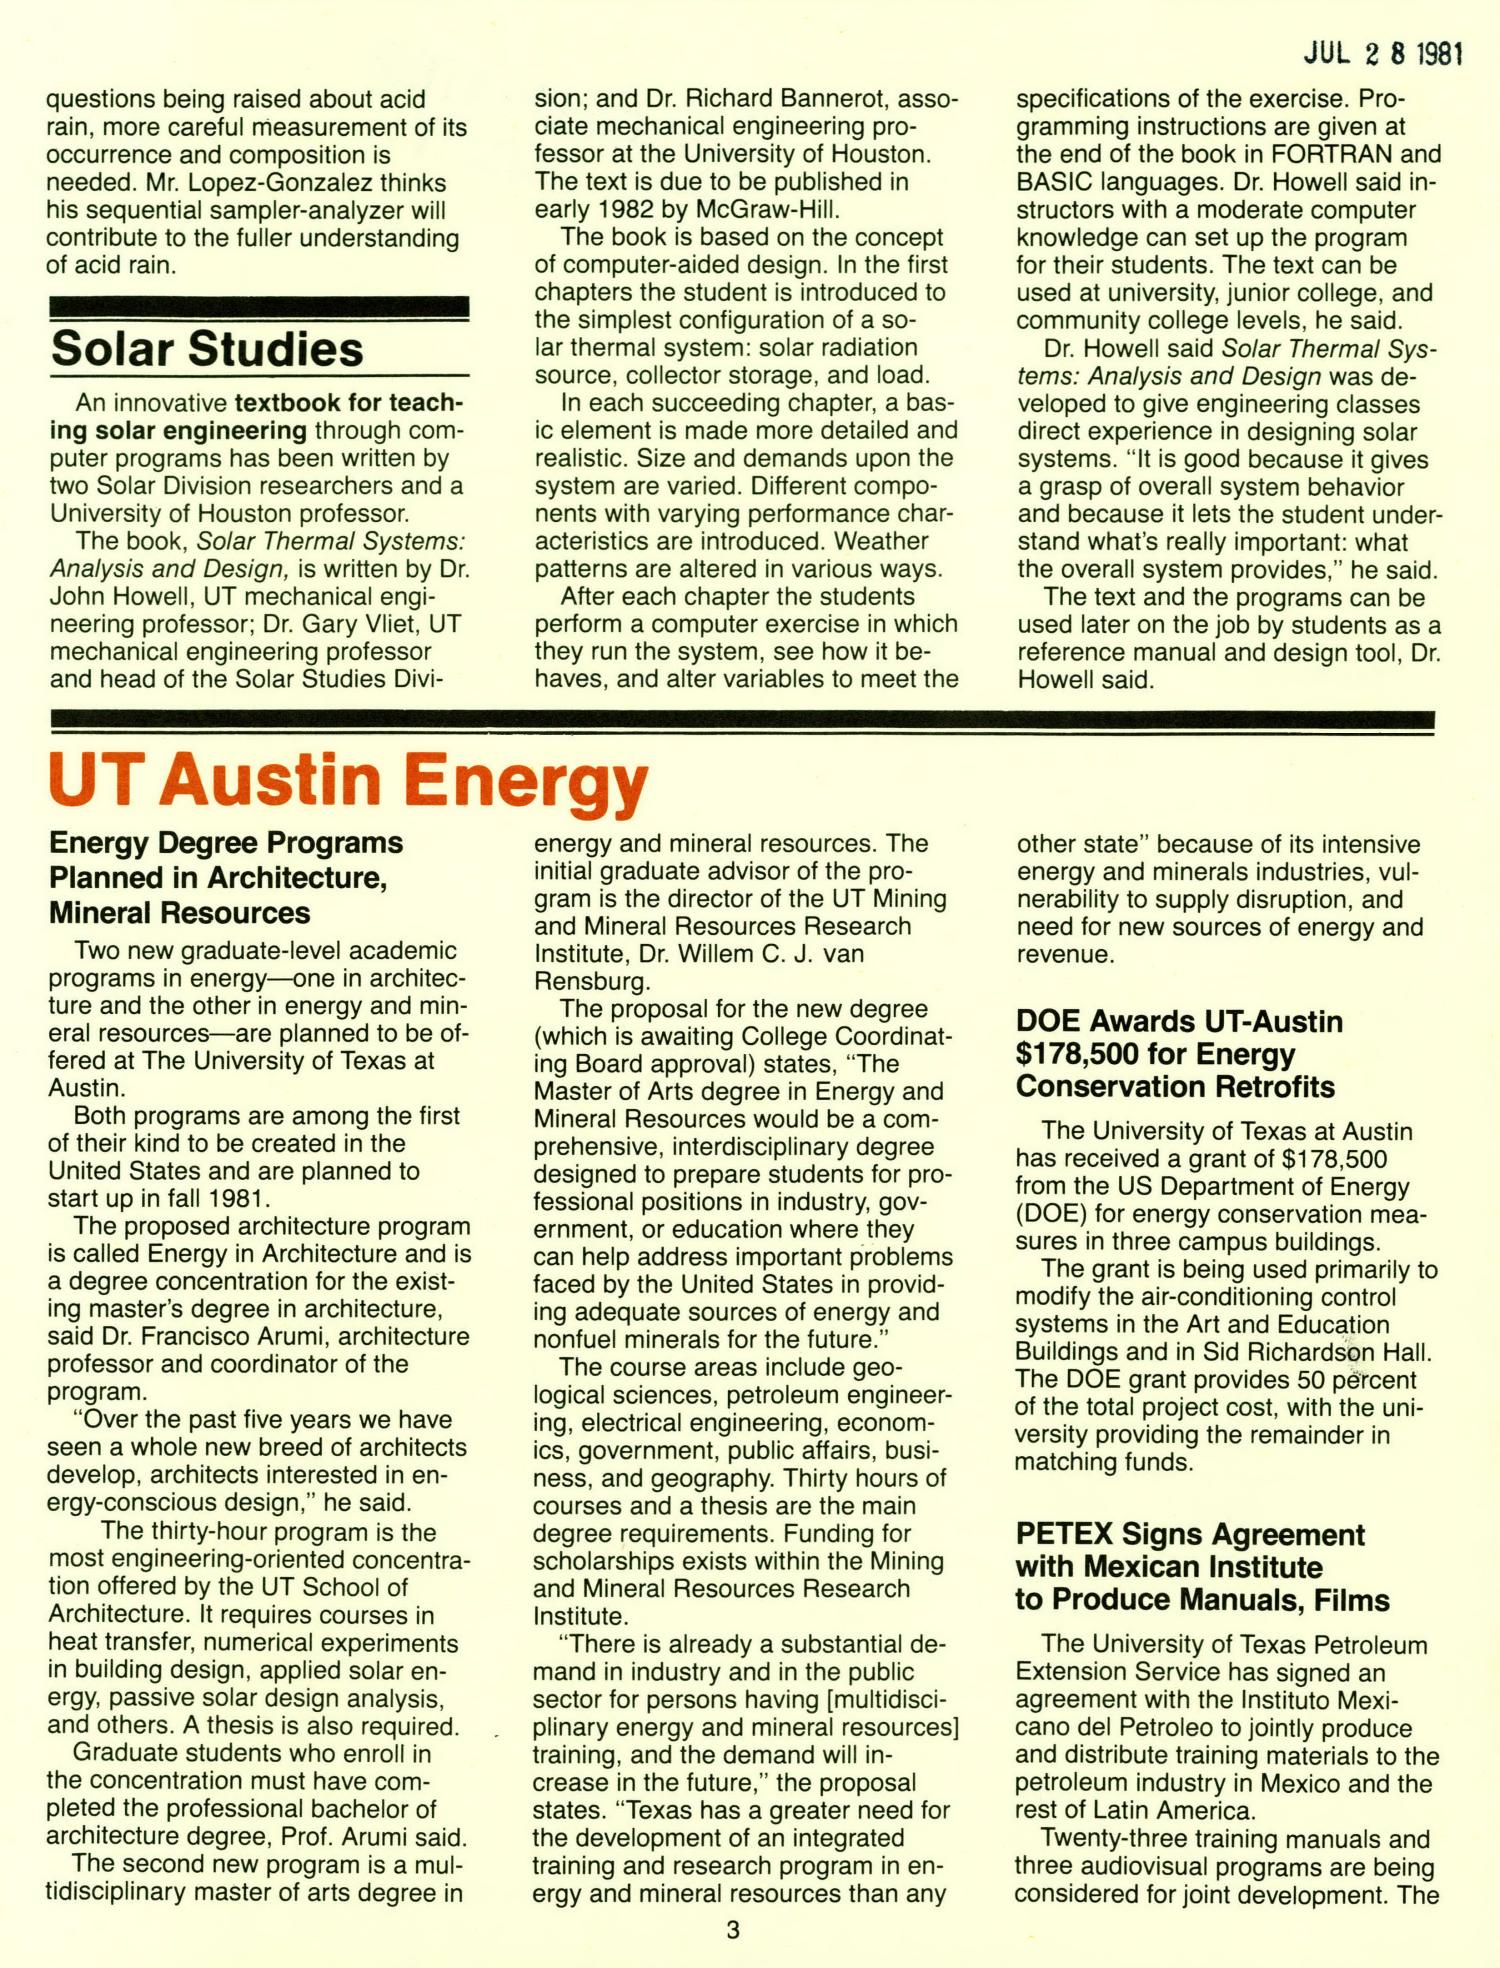 Energy Studies, Volume 6, Number 2, November/December 1980
                                                
                                                    3
                                                